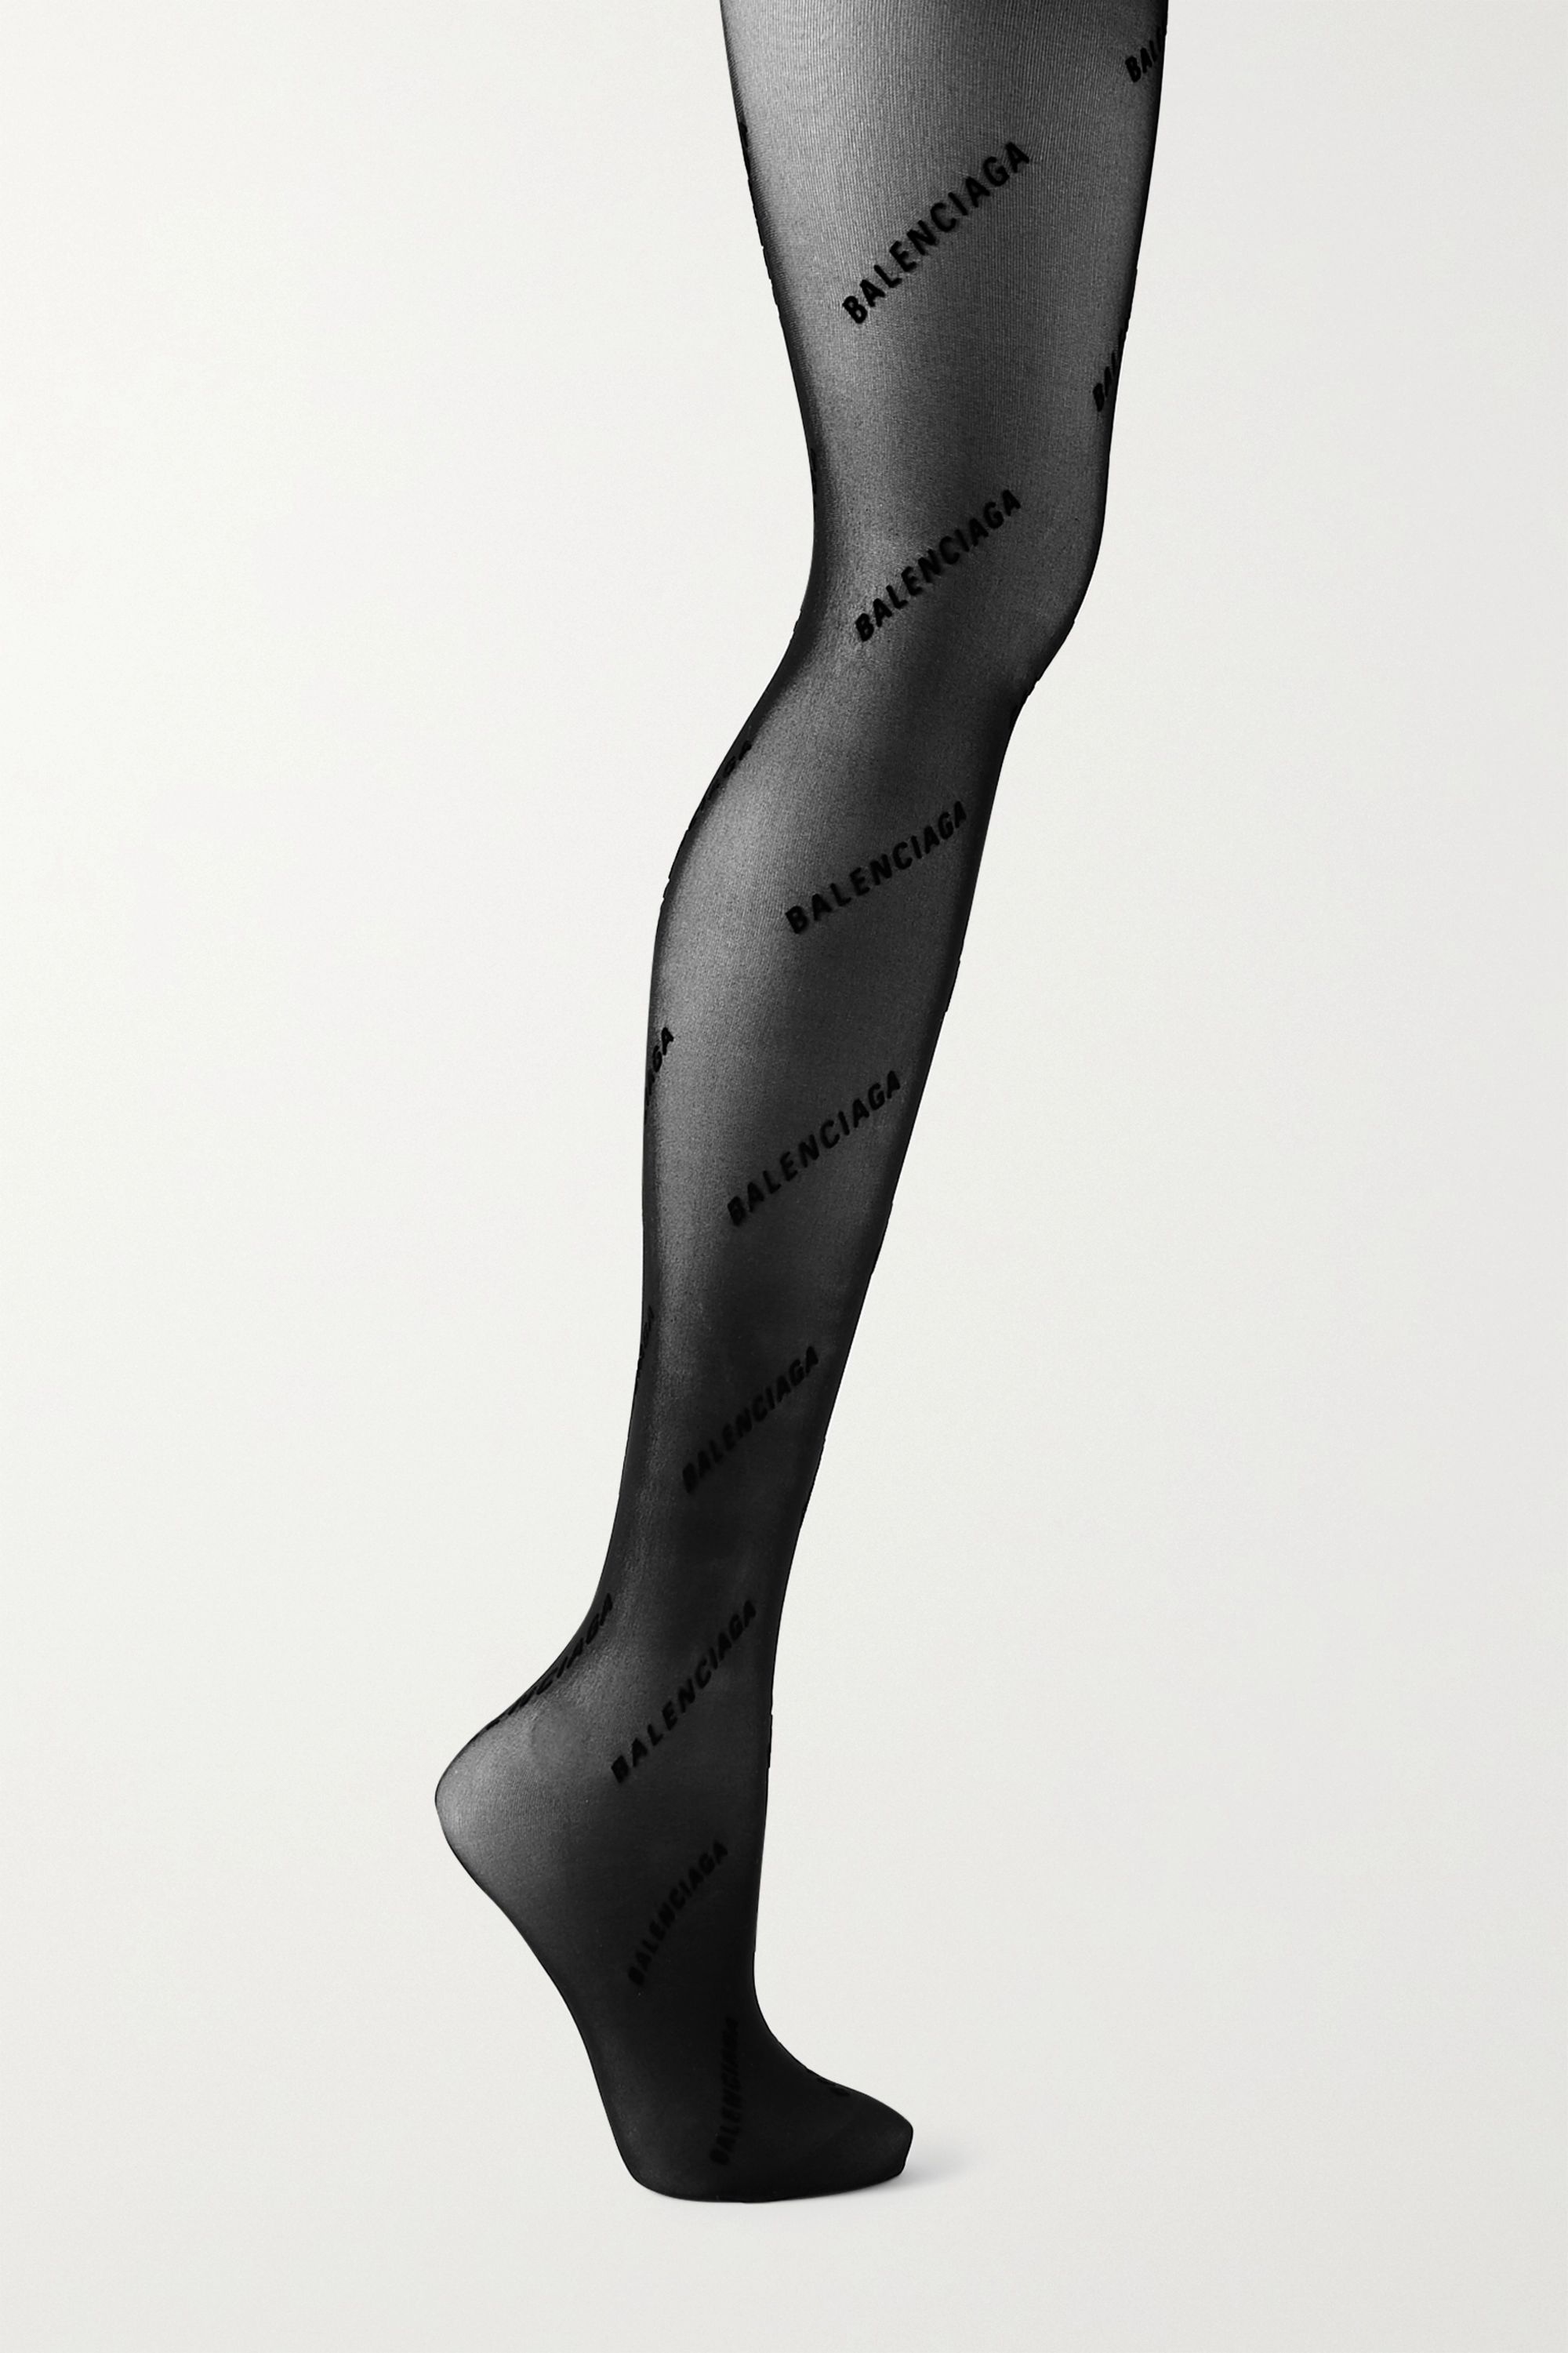 Accessories, Lv Cc Monogram Charcoal Logo Nylon Pantyhose Black Tights